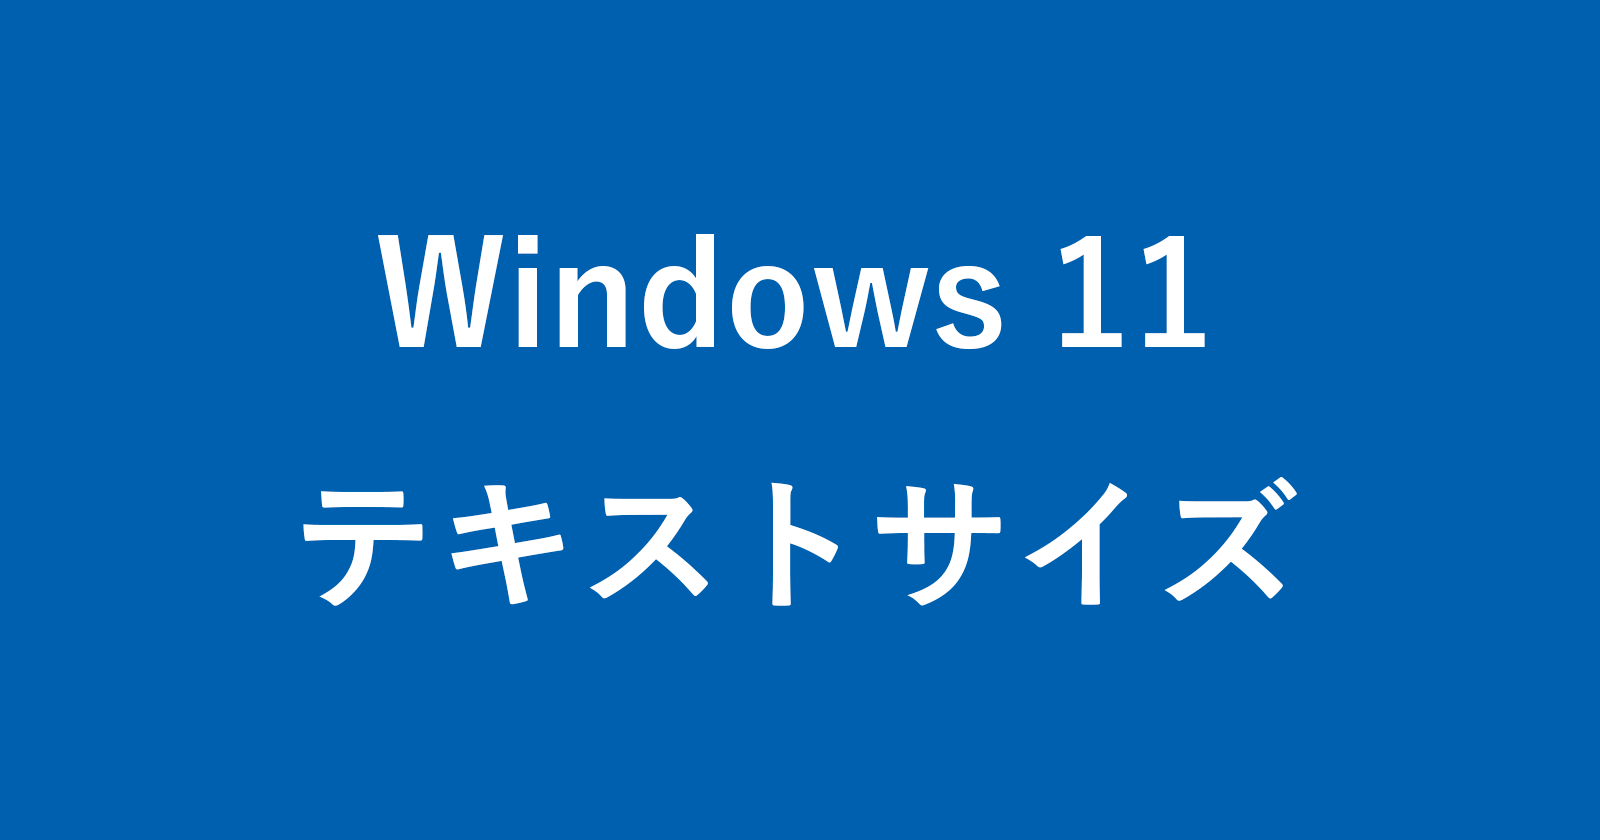 windows 11 font size